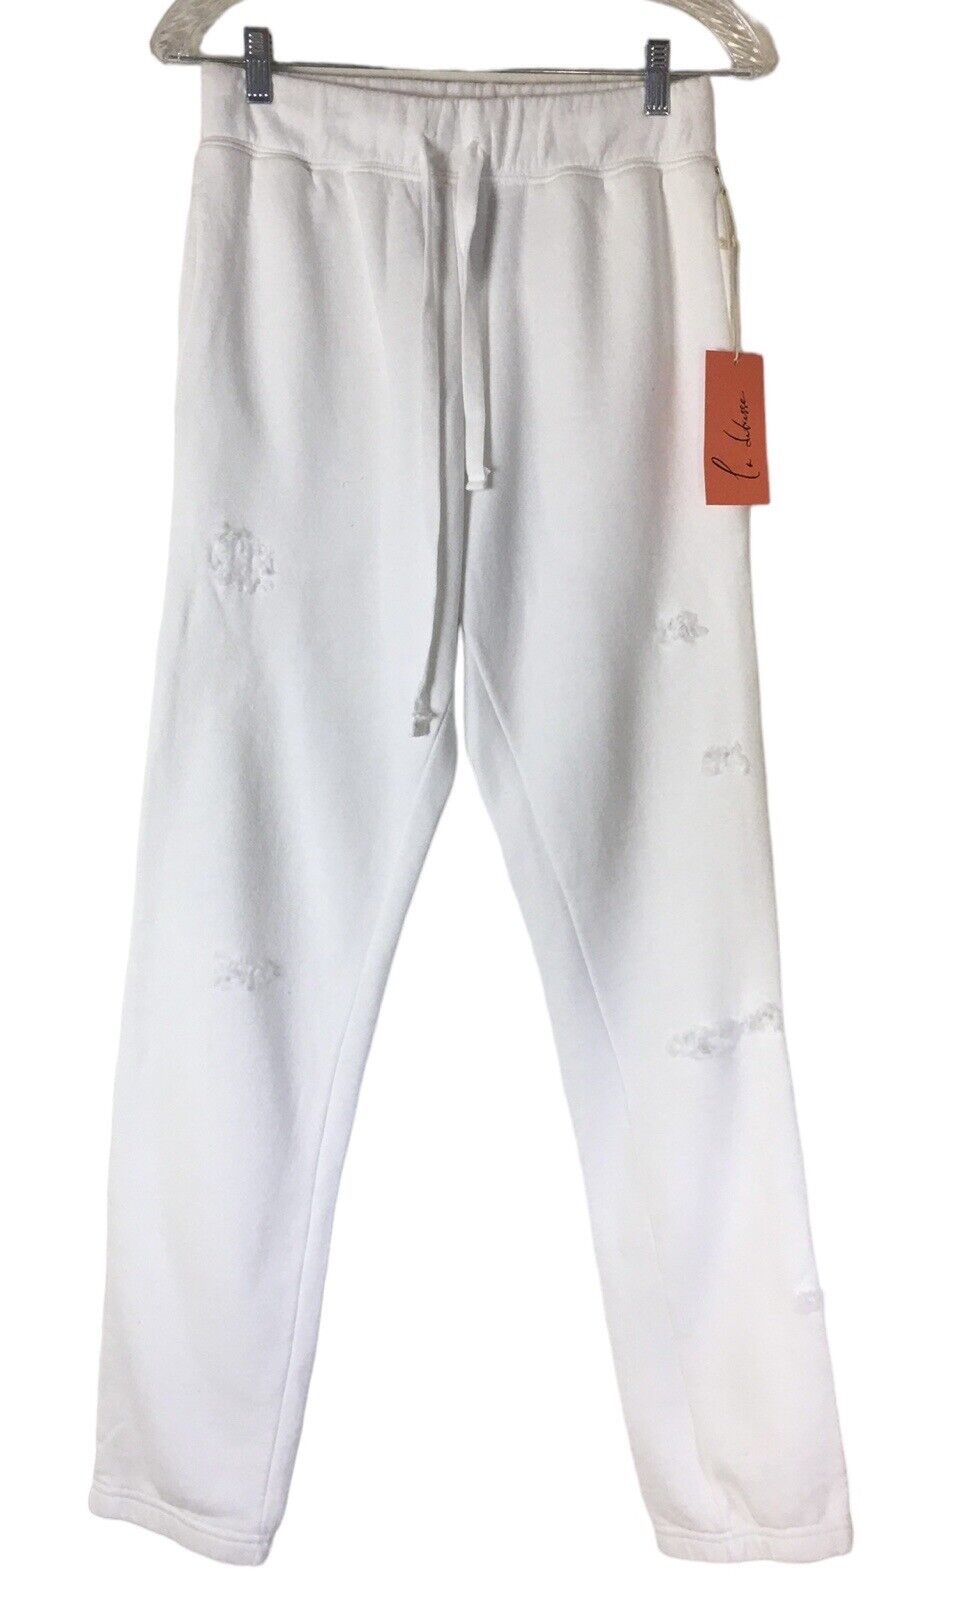 NEW La Detresse White Distressed Sweatpants Size XS Streetwear NWT